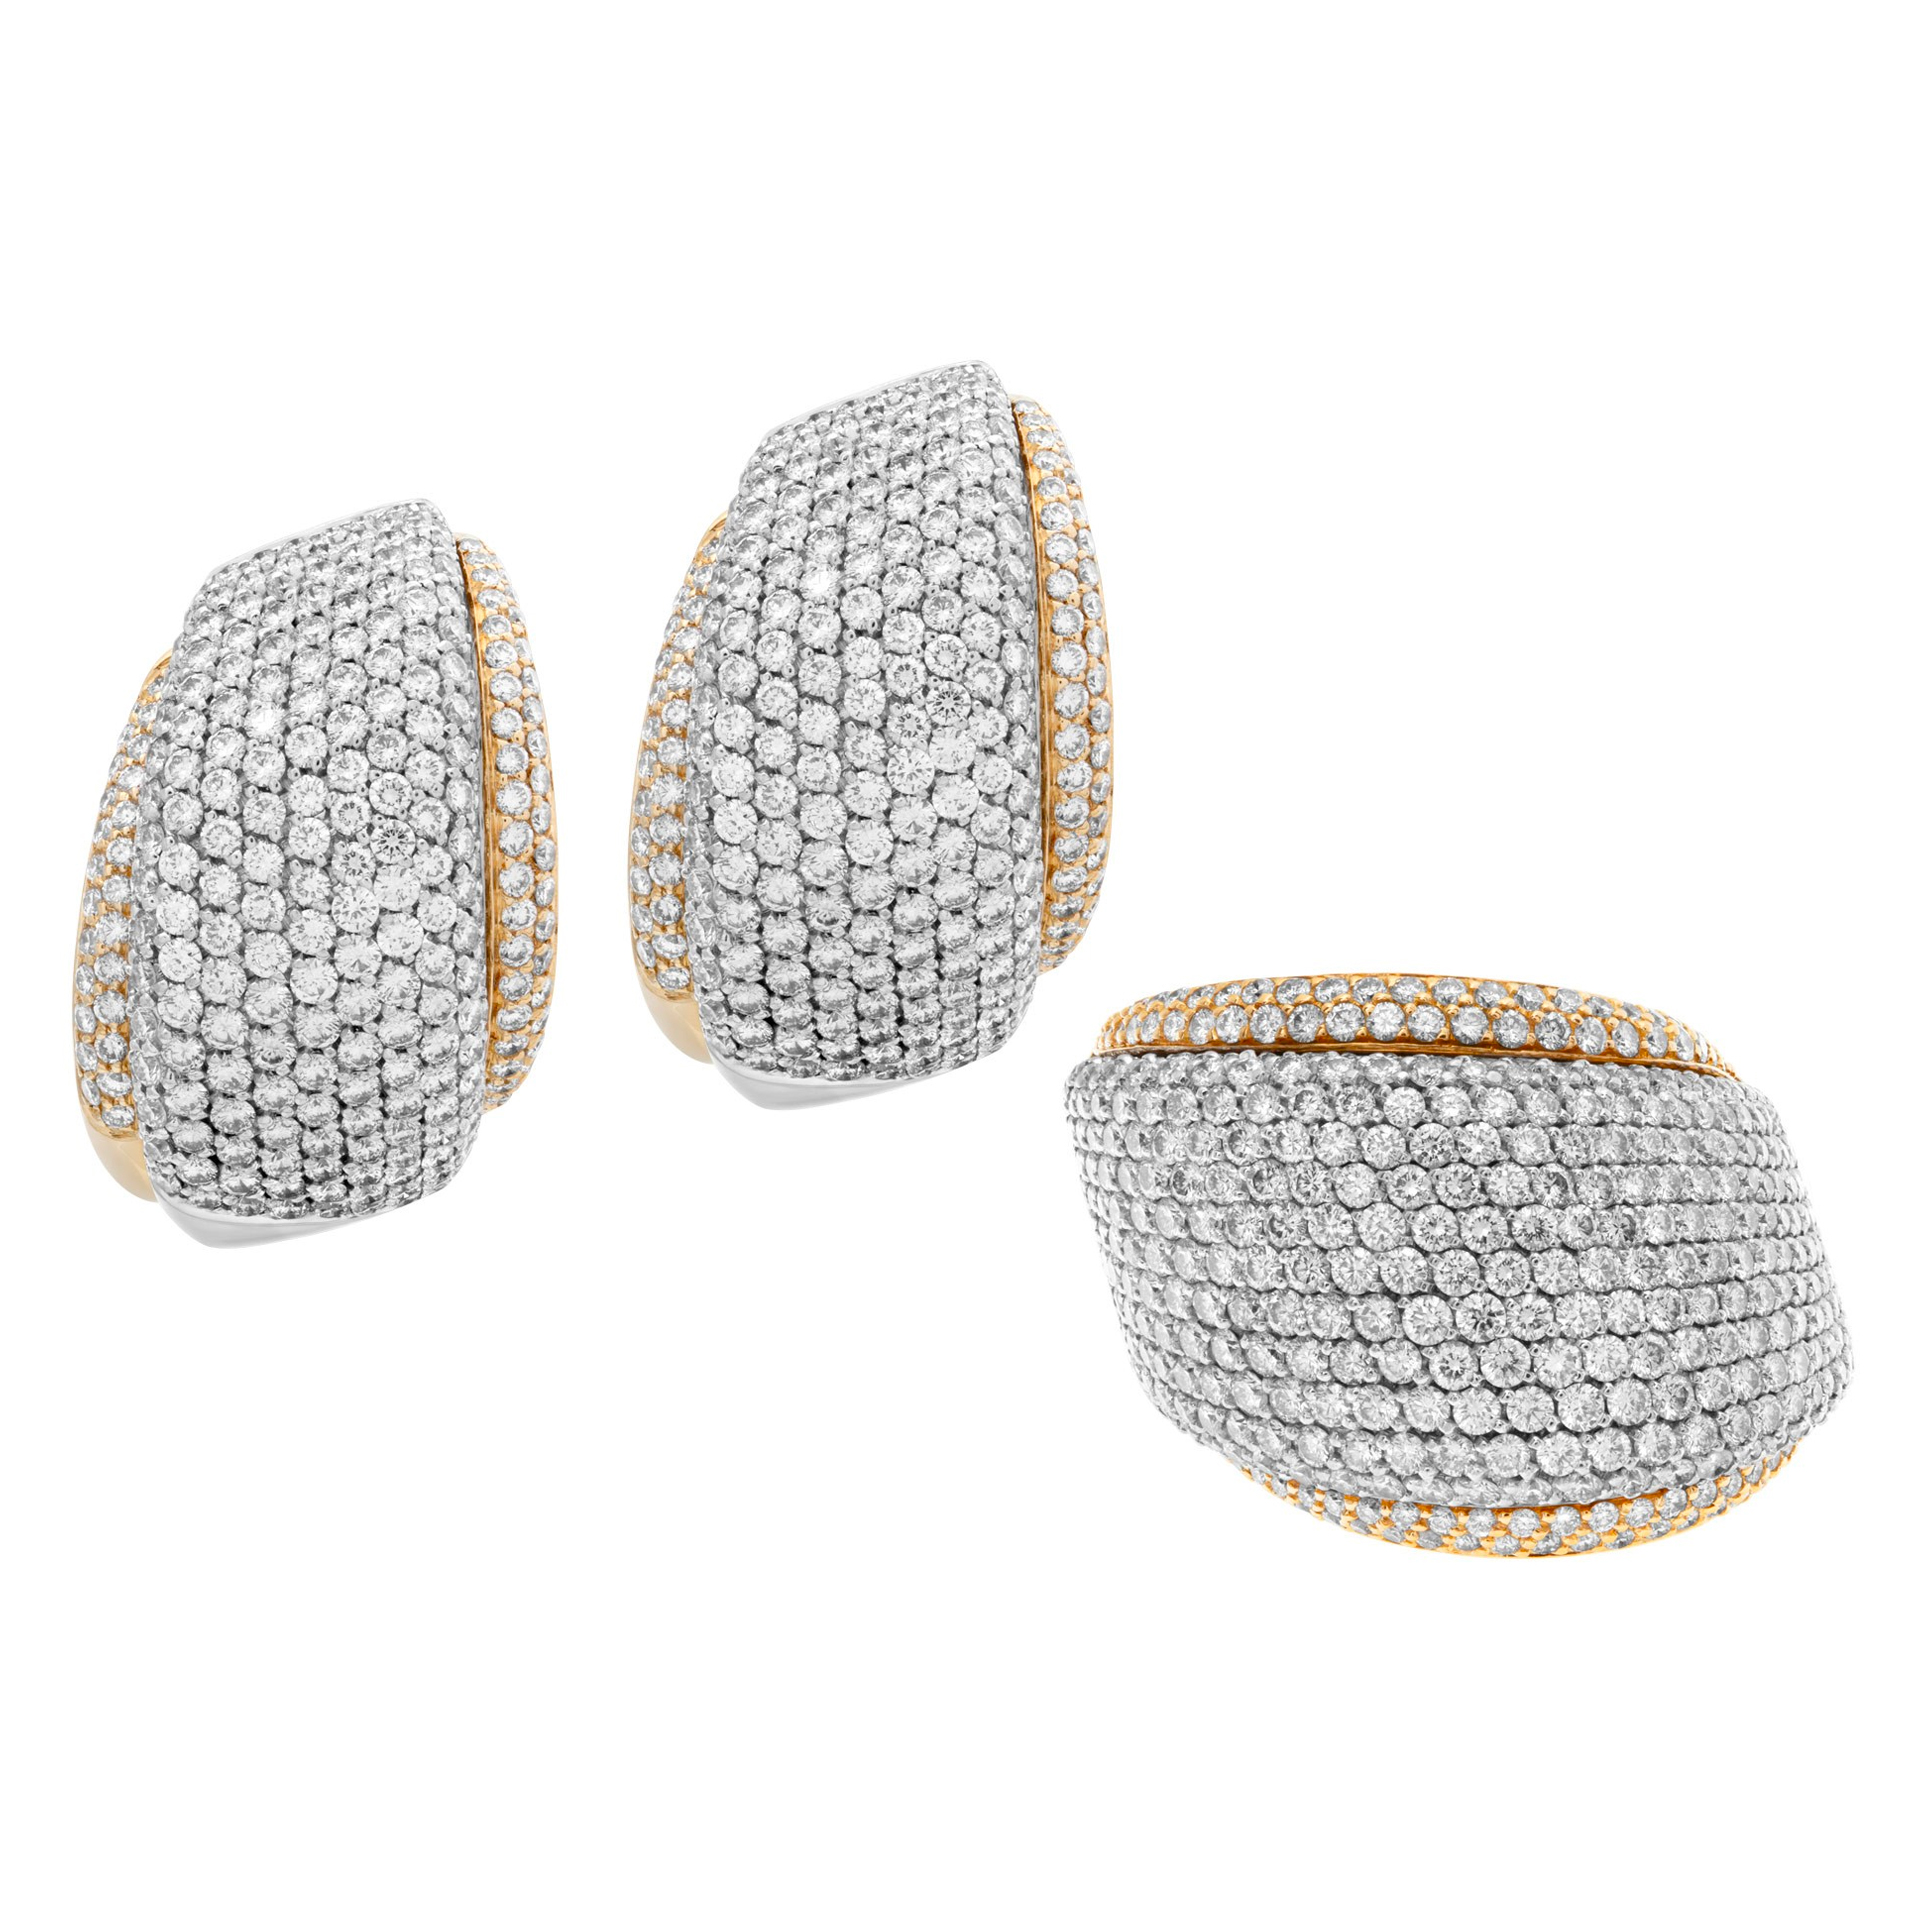 Giorgio Viscoti diamonds earrings & ring set in 18k white & yellow gold